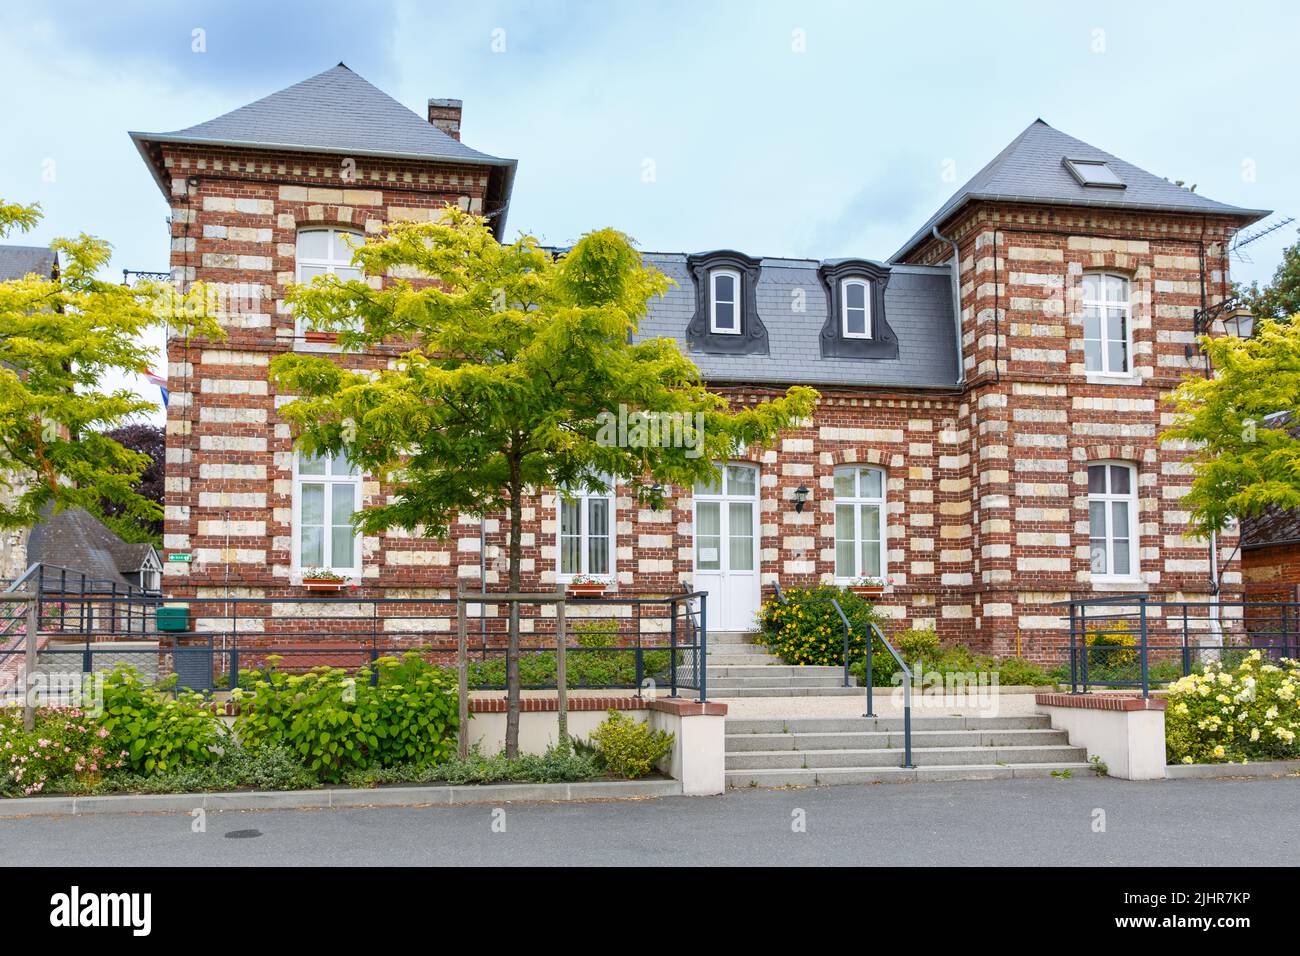 France, Normandy region, Seine-Maritime, Terroir de Caux, Saint-Victor l'Abbaye, town hall, Stock Photo